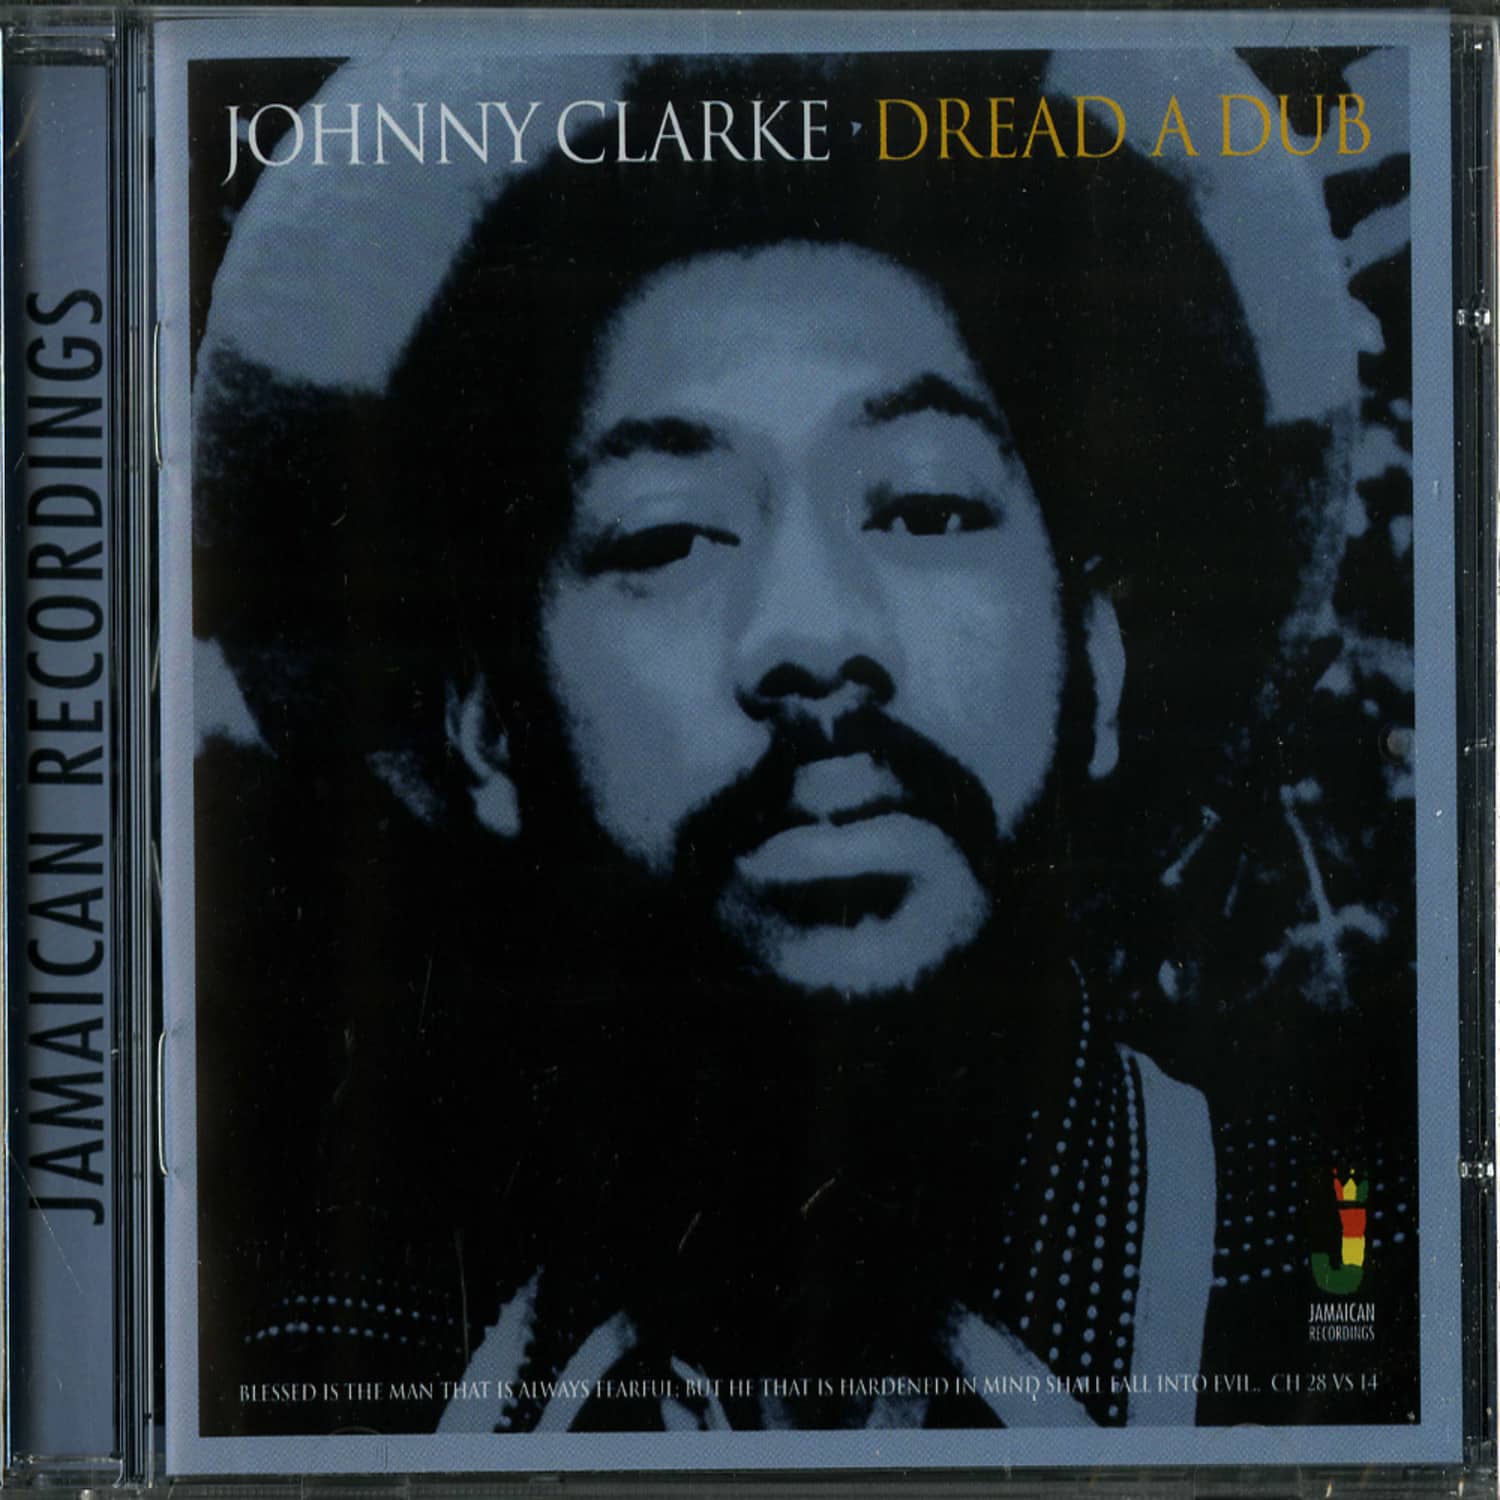 Johnny Clarke - DREAD A DUB 